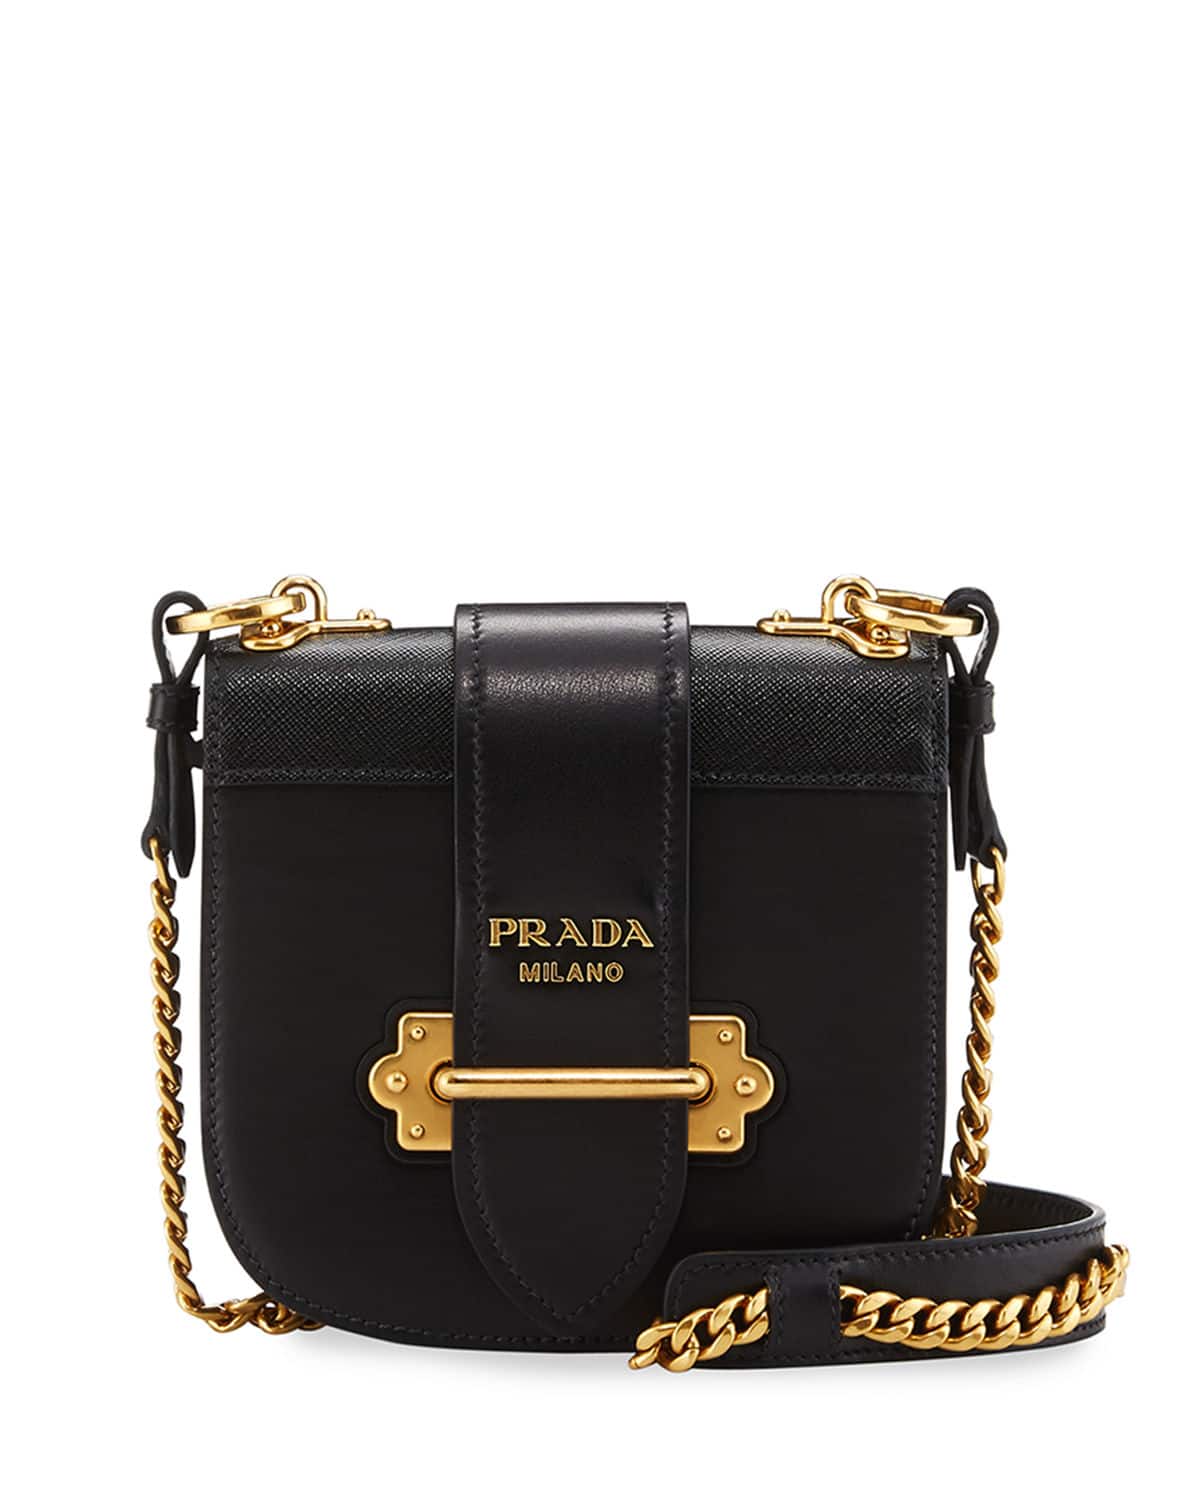 Prada Pre-Fall 2017 Bag Collection | Spotted Fashion